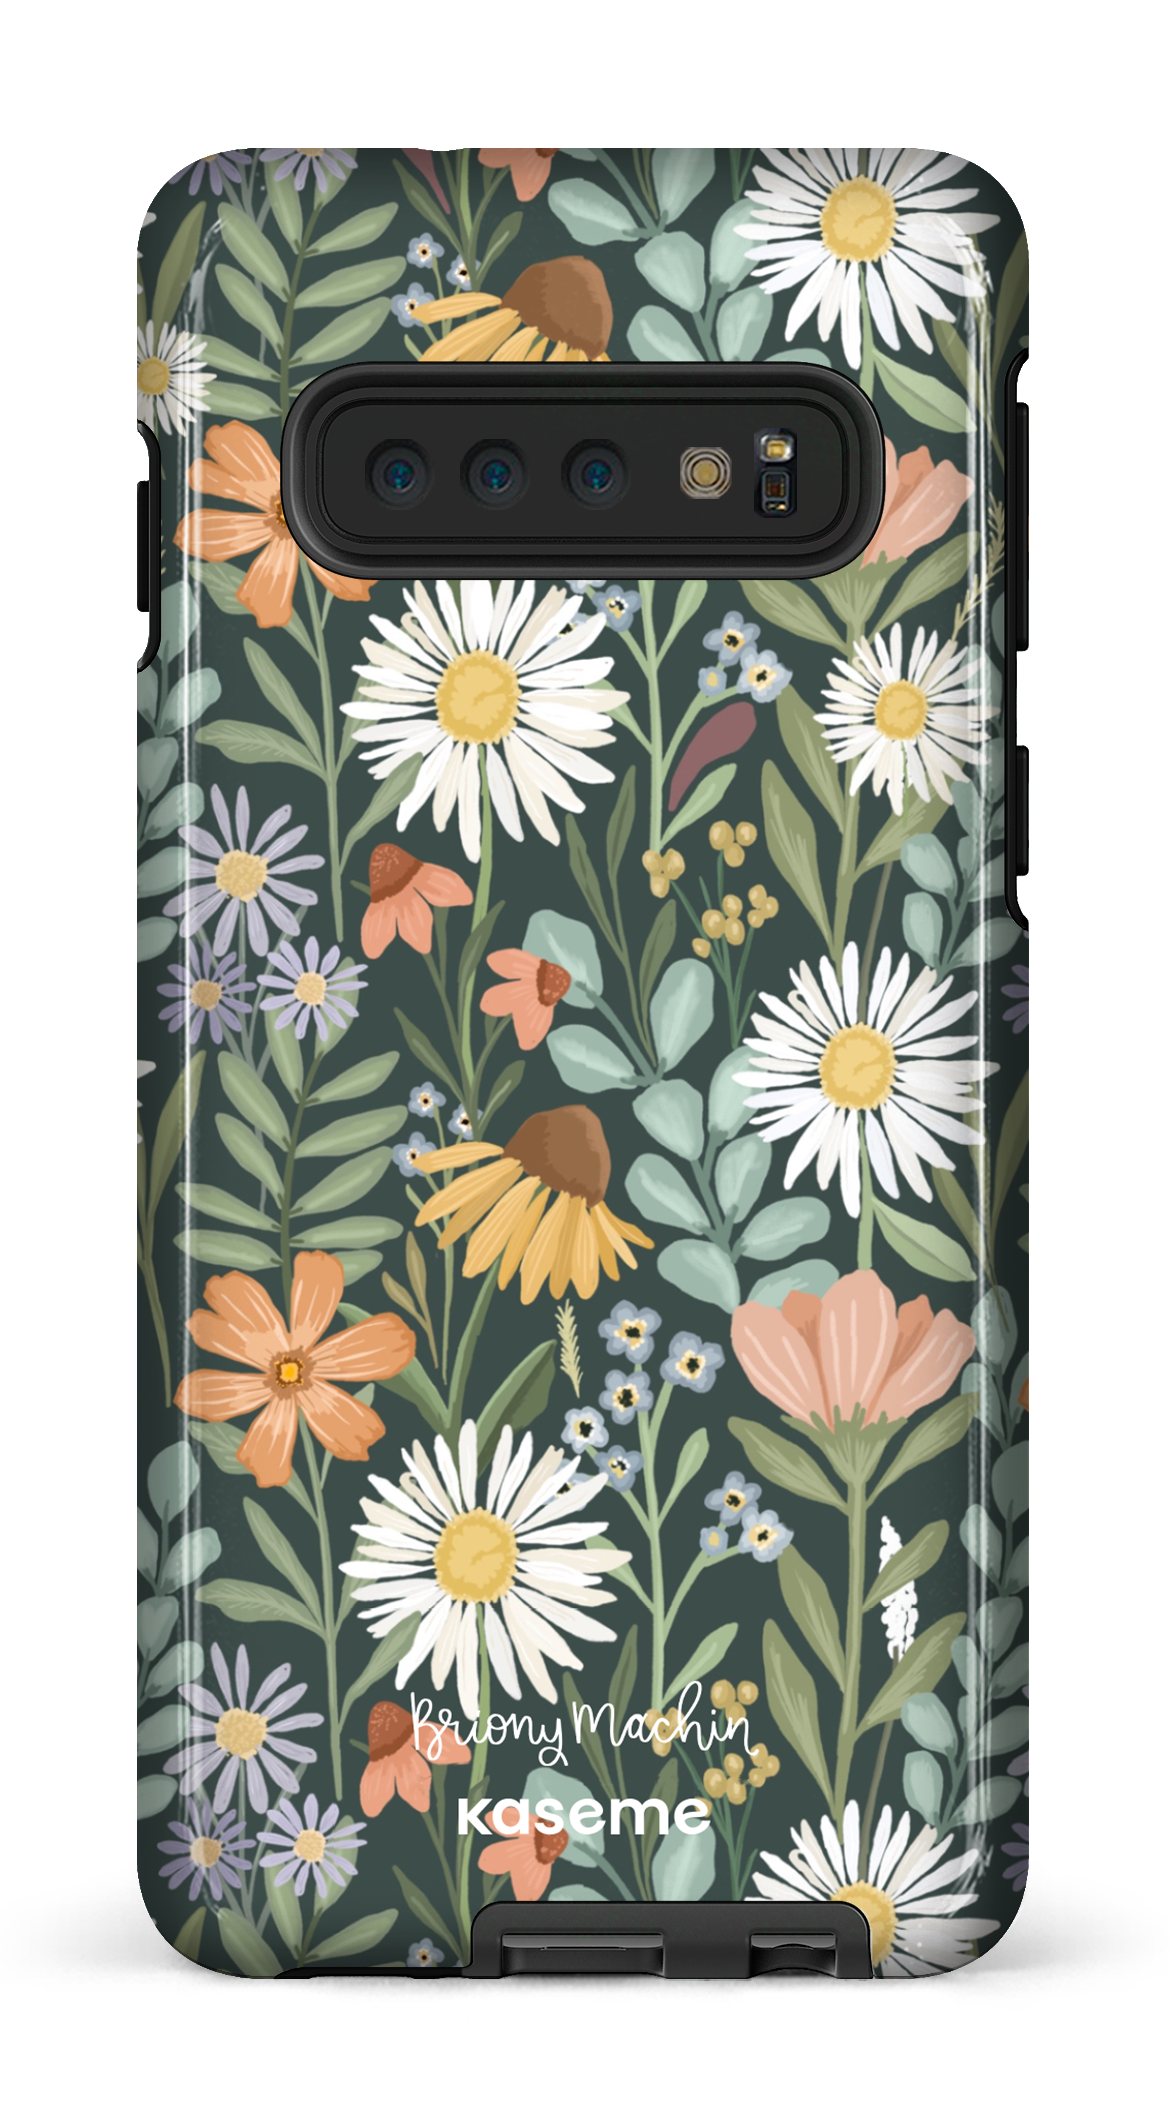 Sending Flowers Green by Briony Machin - Galaxy S10